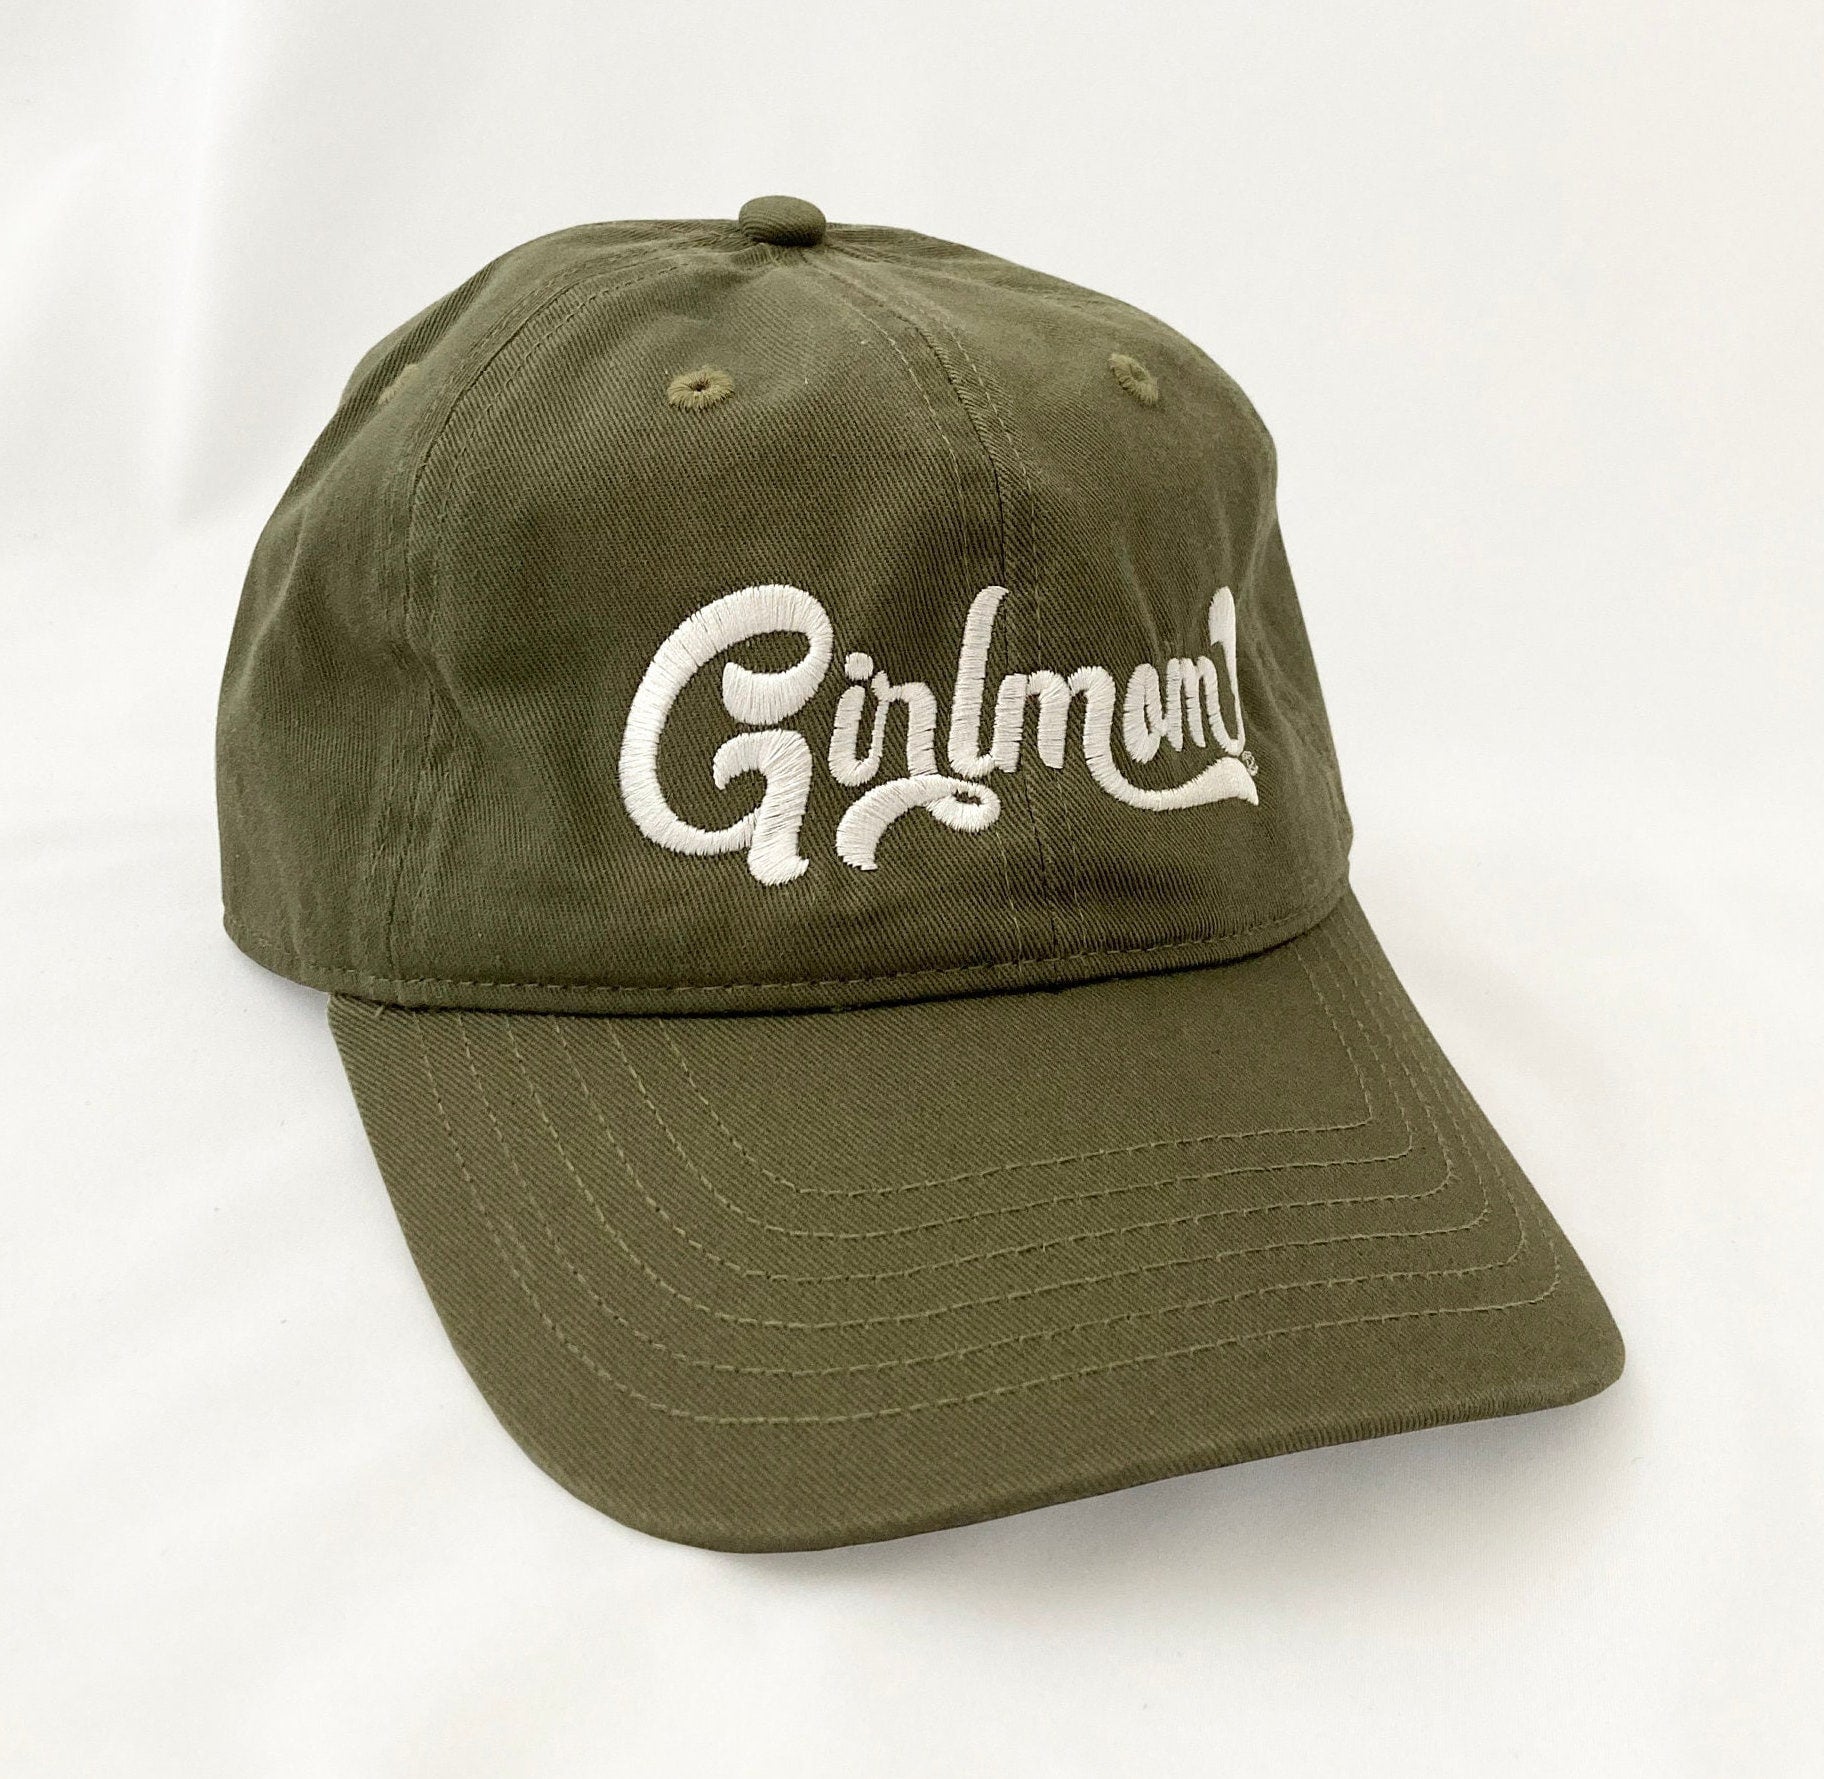 Girlmom® Retro Authentic Pigment Dyed Twill Cap